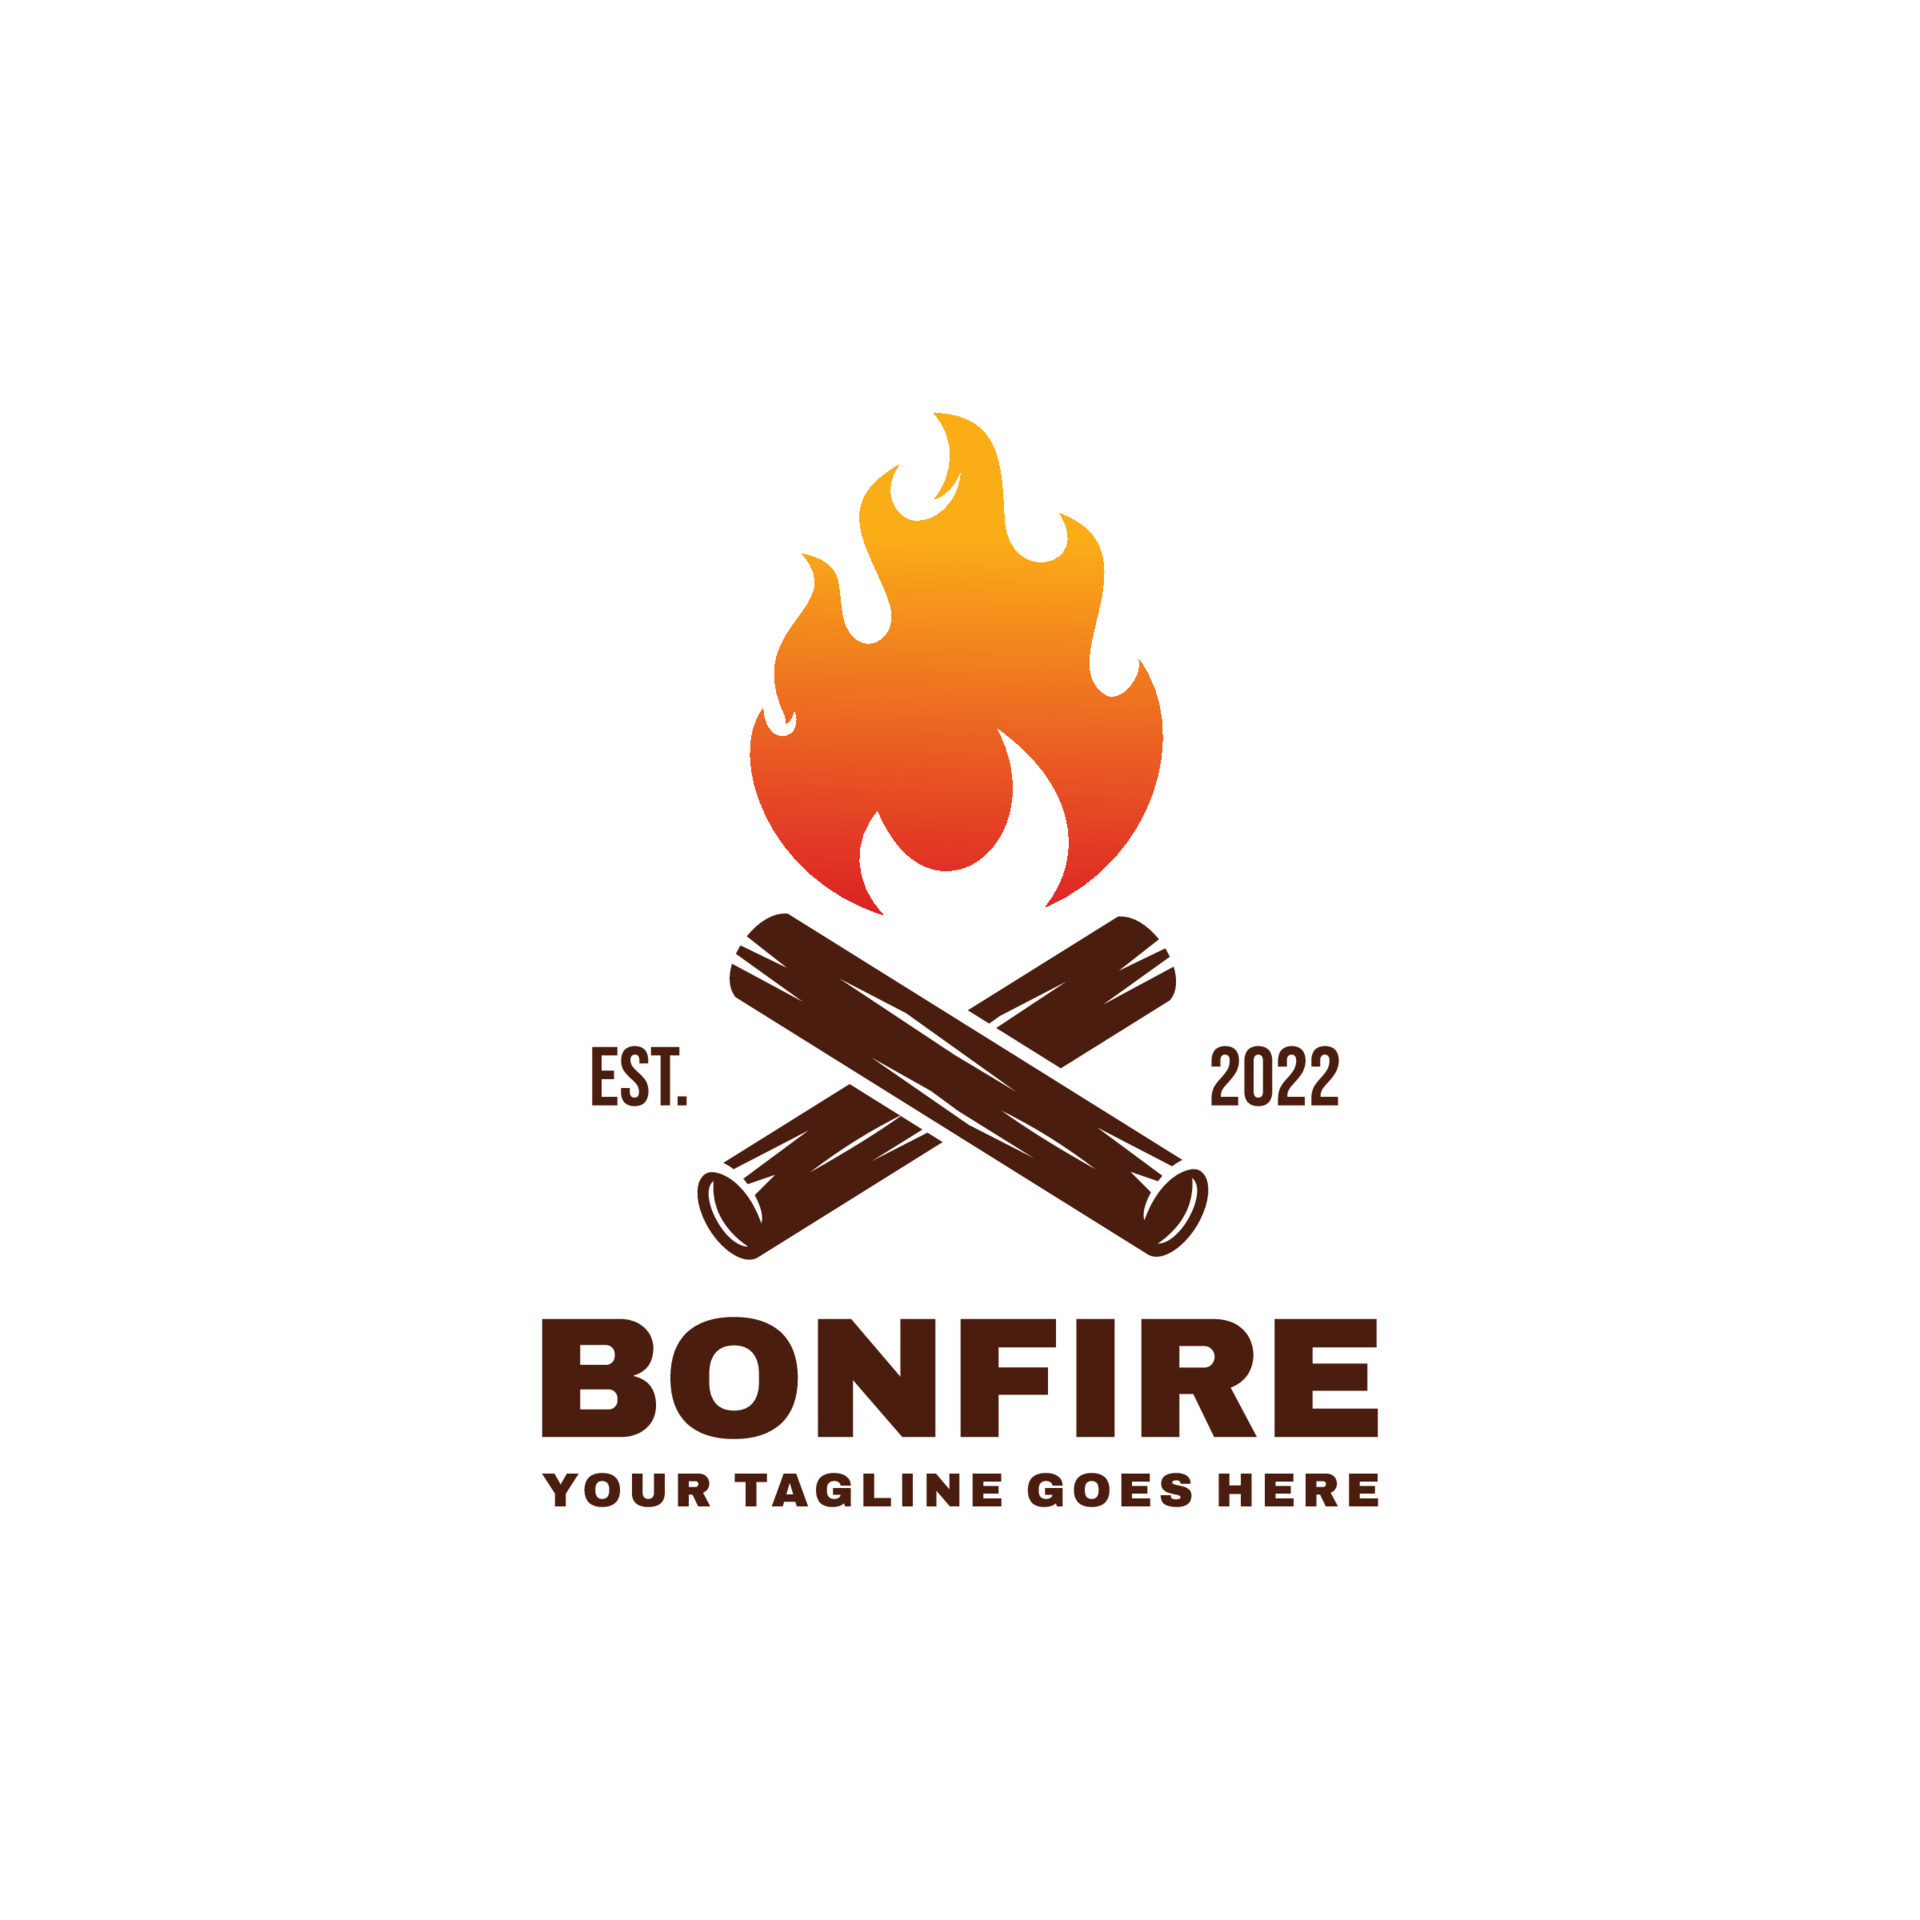 Bonfire logo design vector illustration 15236453 Vector Art at Vecteezy